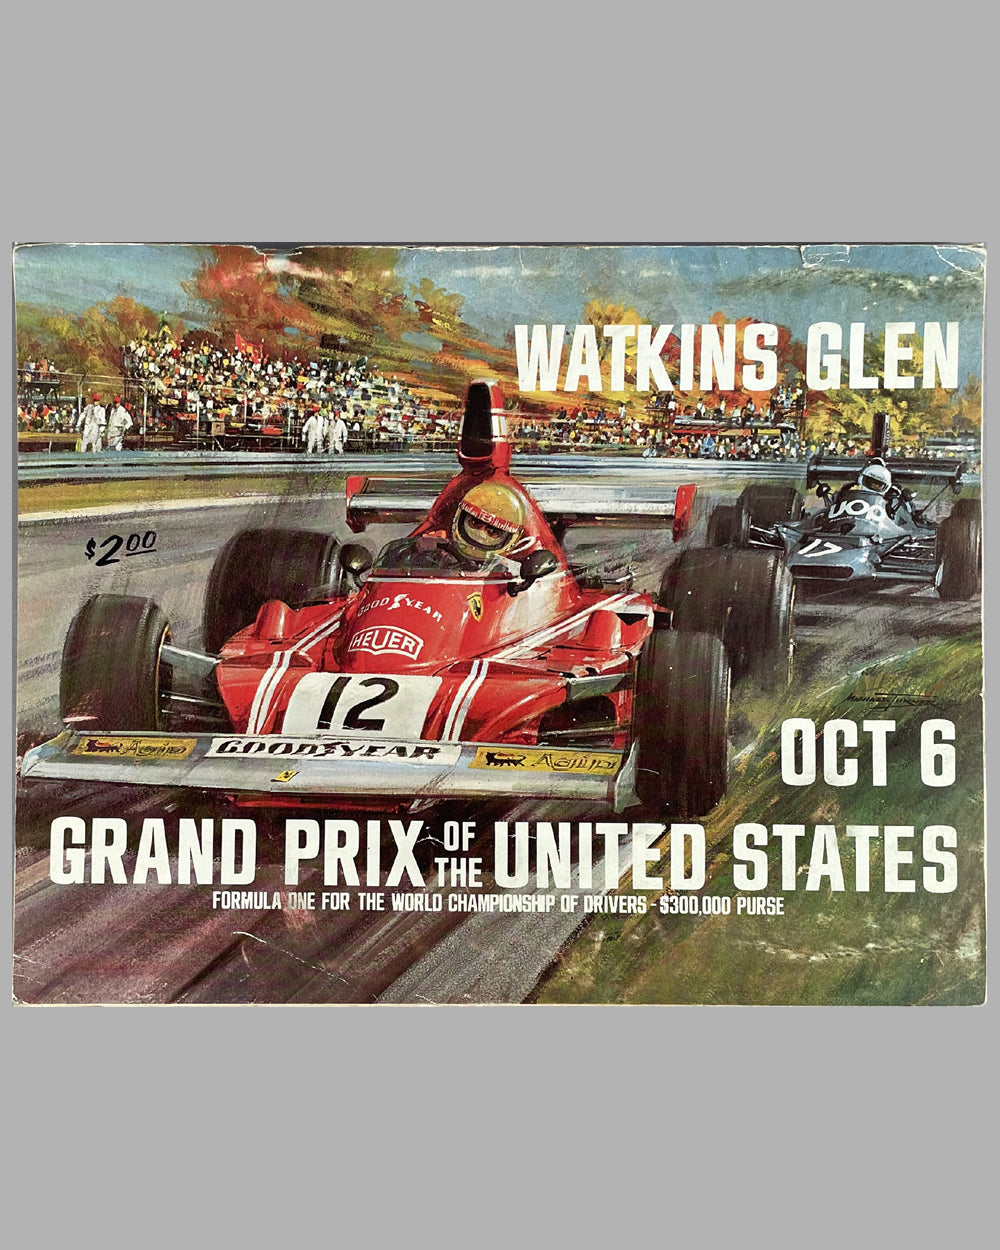 1974 U.S. Grand Prix at Watkins Glen program for the Formula 1 race